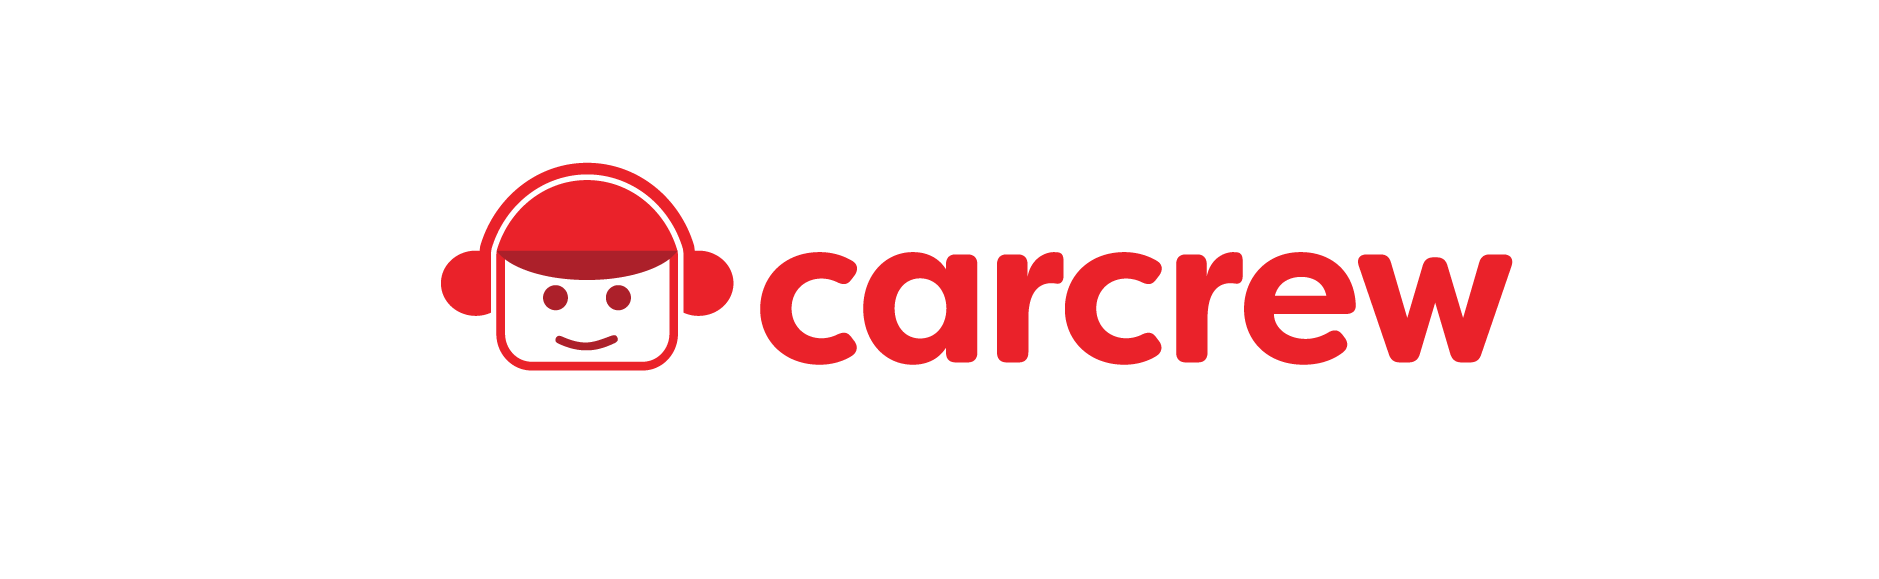 carcrew_logo